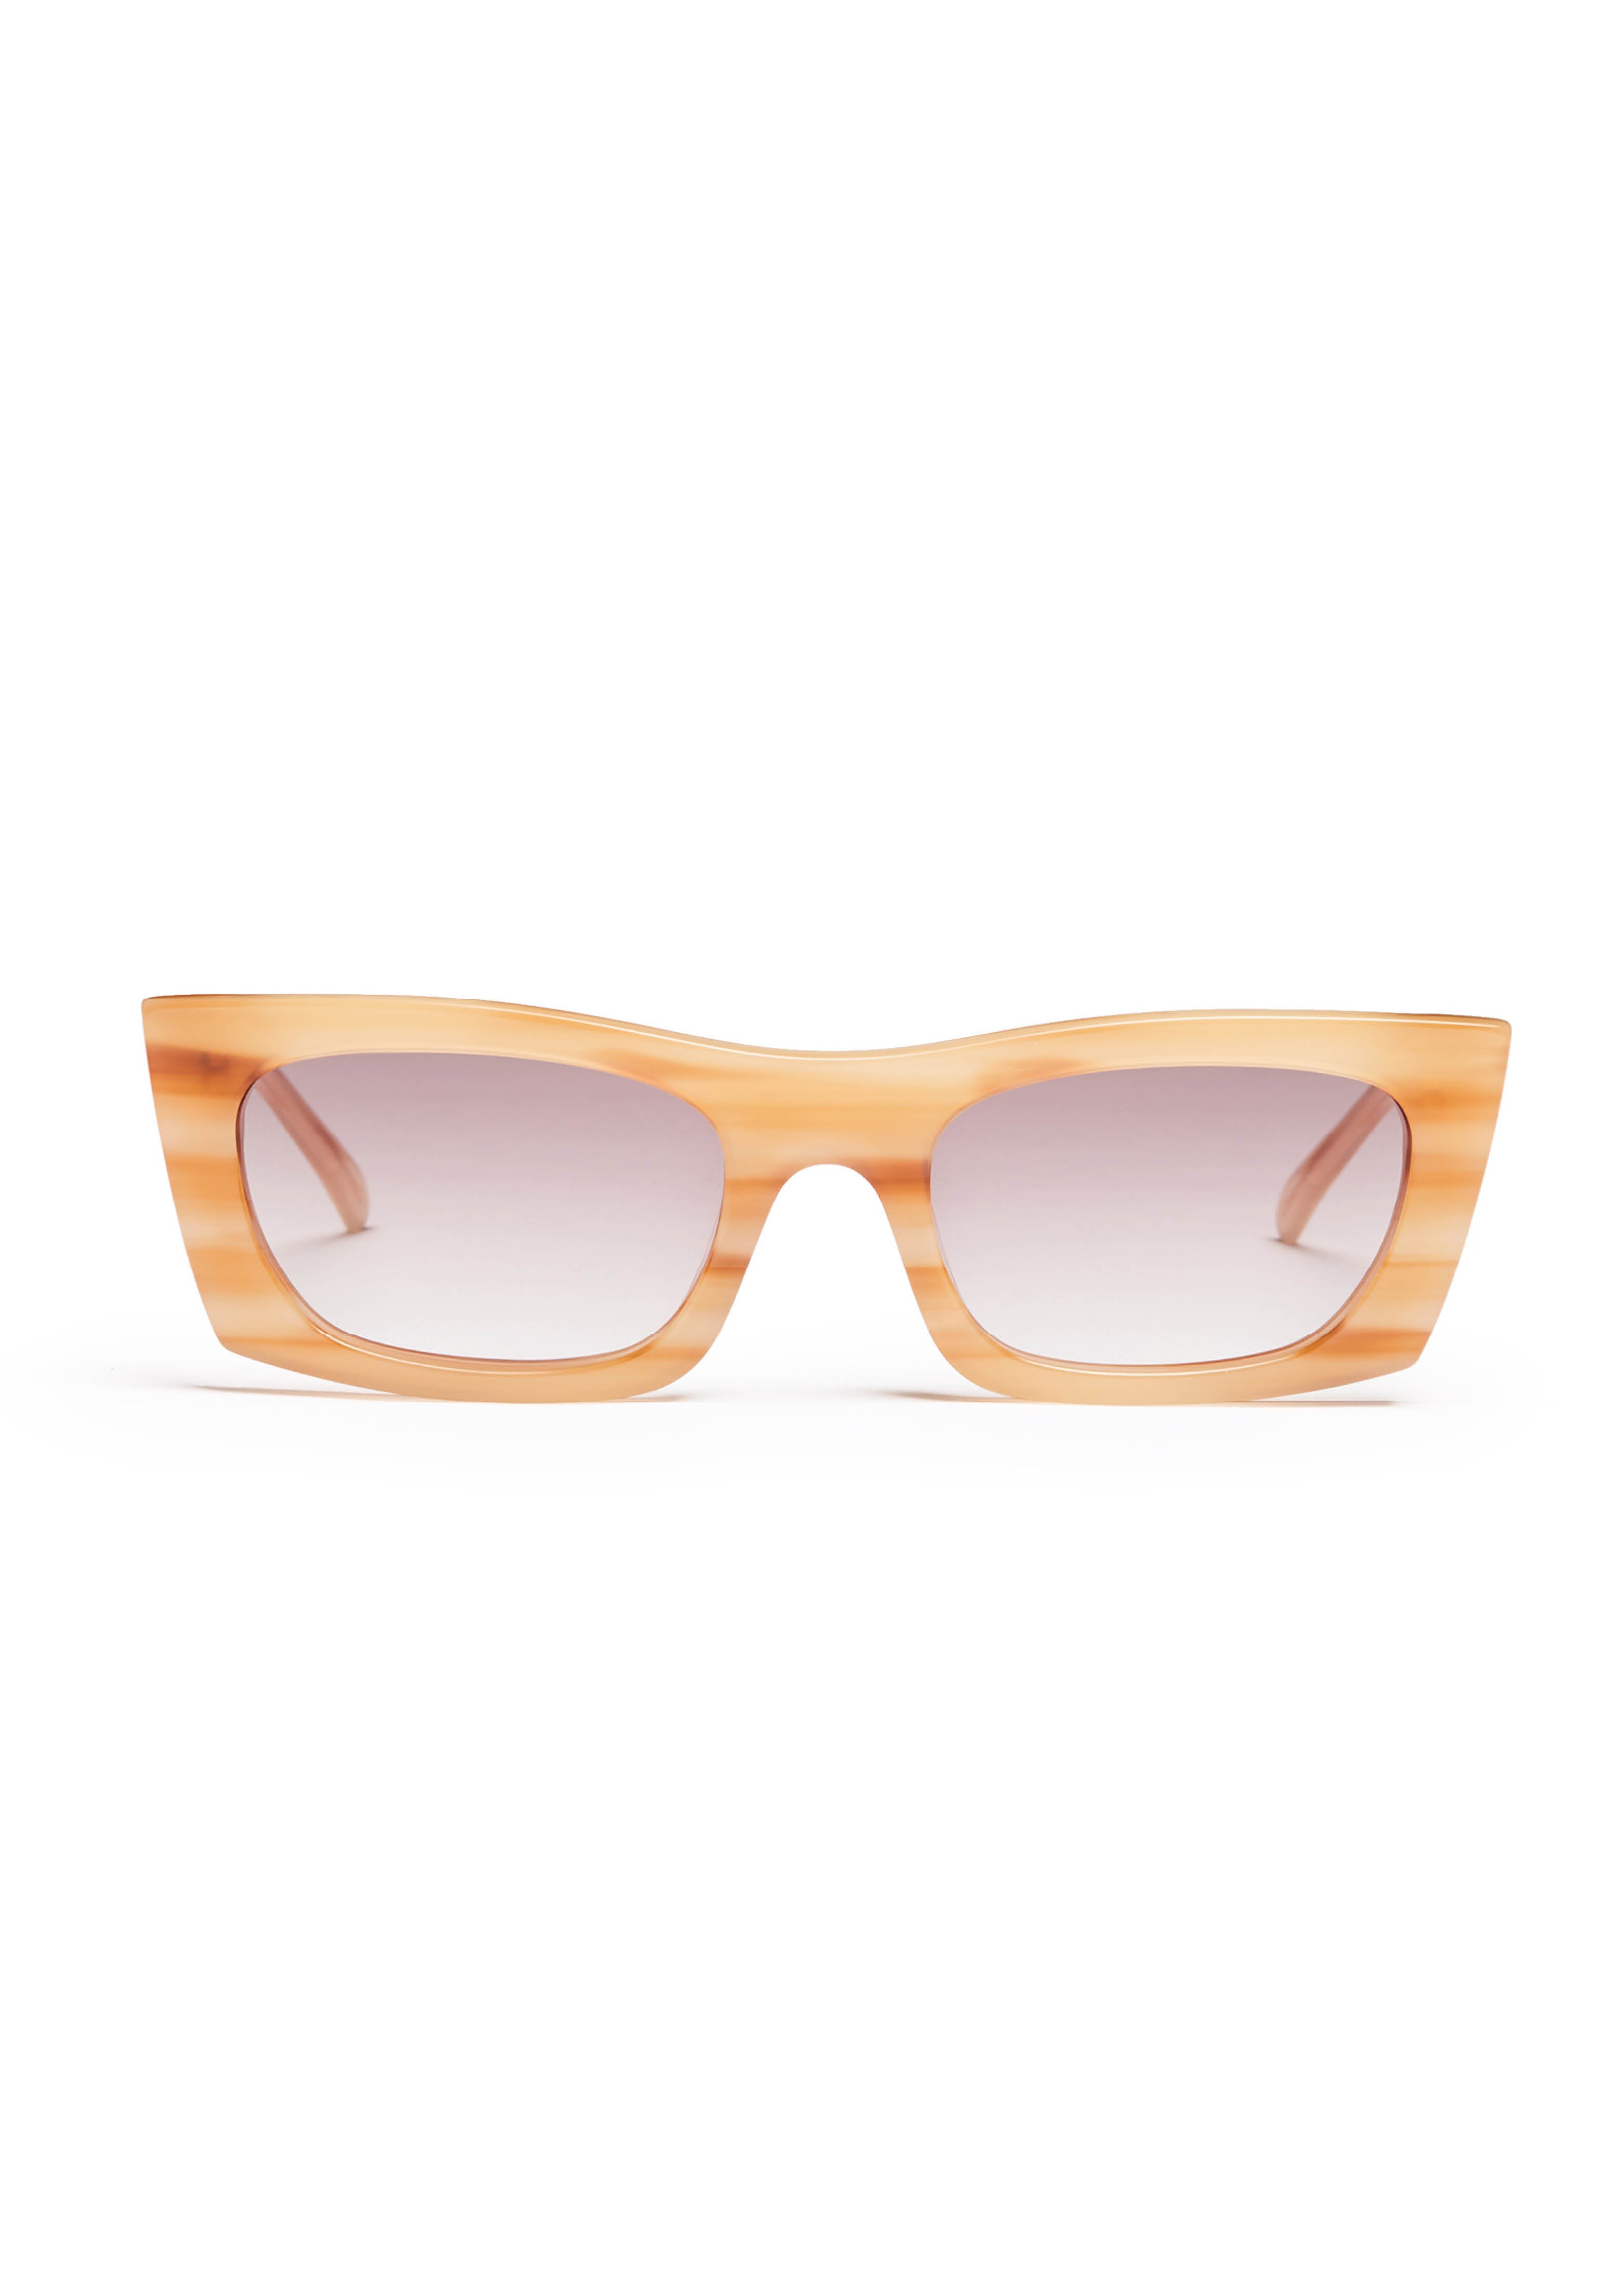 The Crawford Sunglasses - Sand Tort